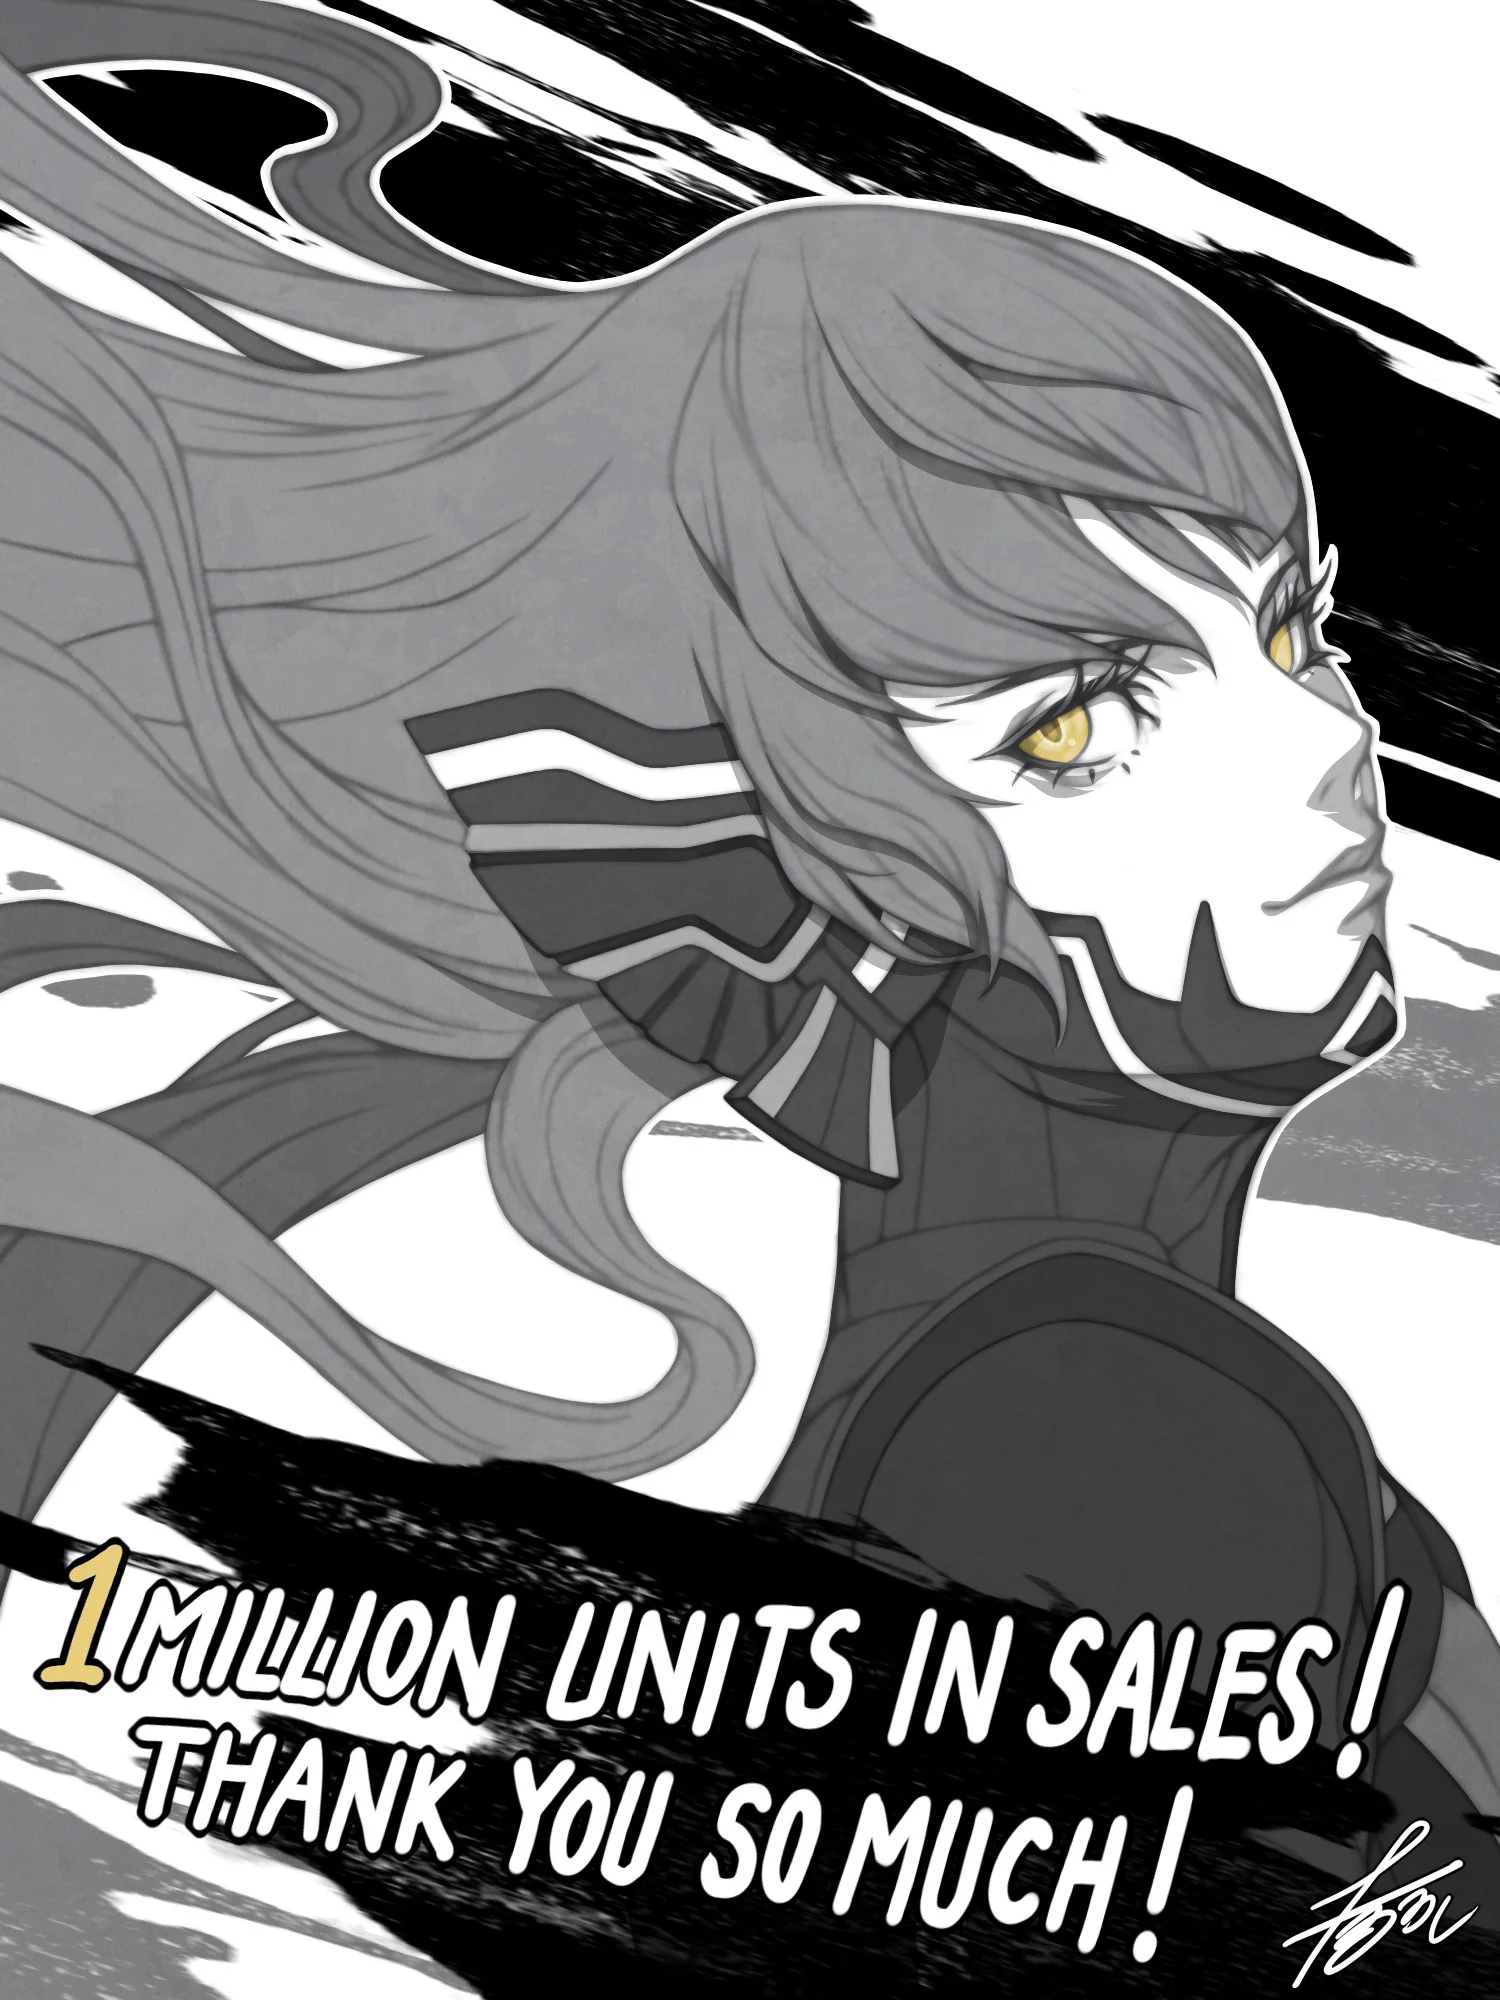 Продажи Shin Megami Tensei V достигли 1 млн копий - фото 1